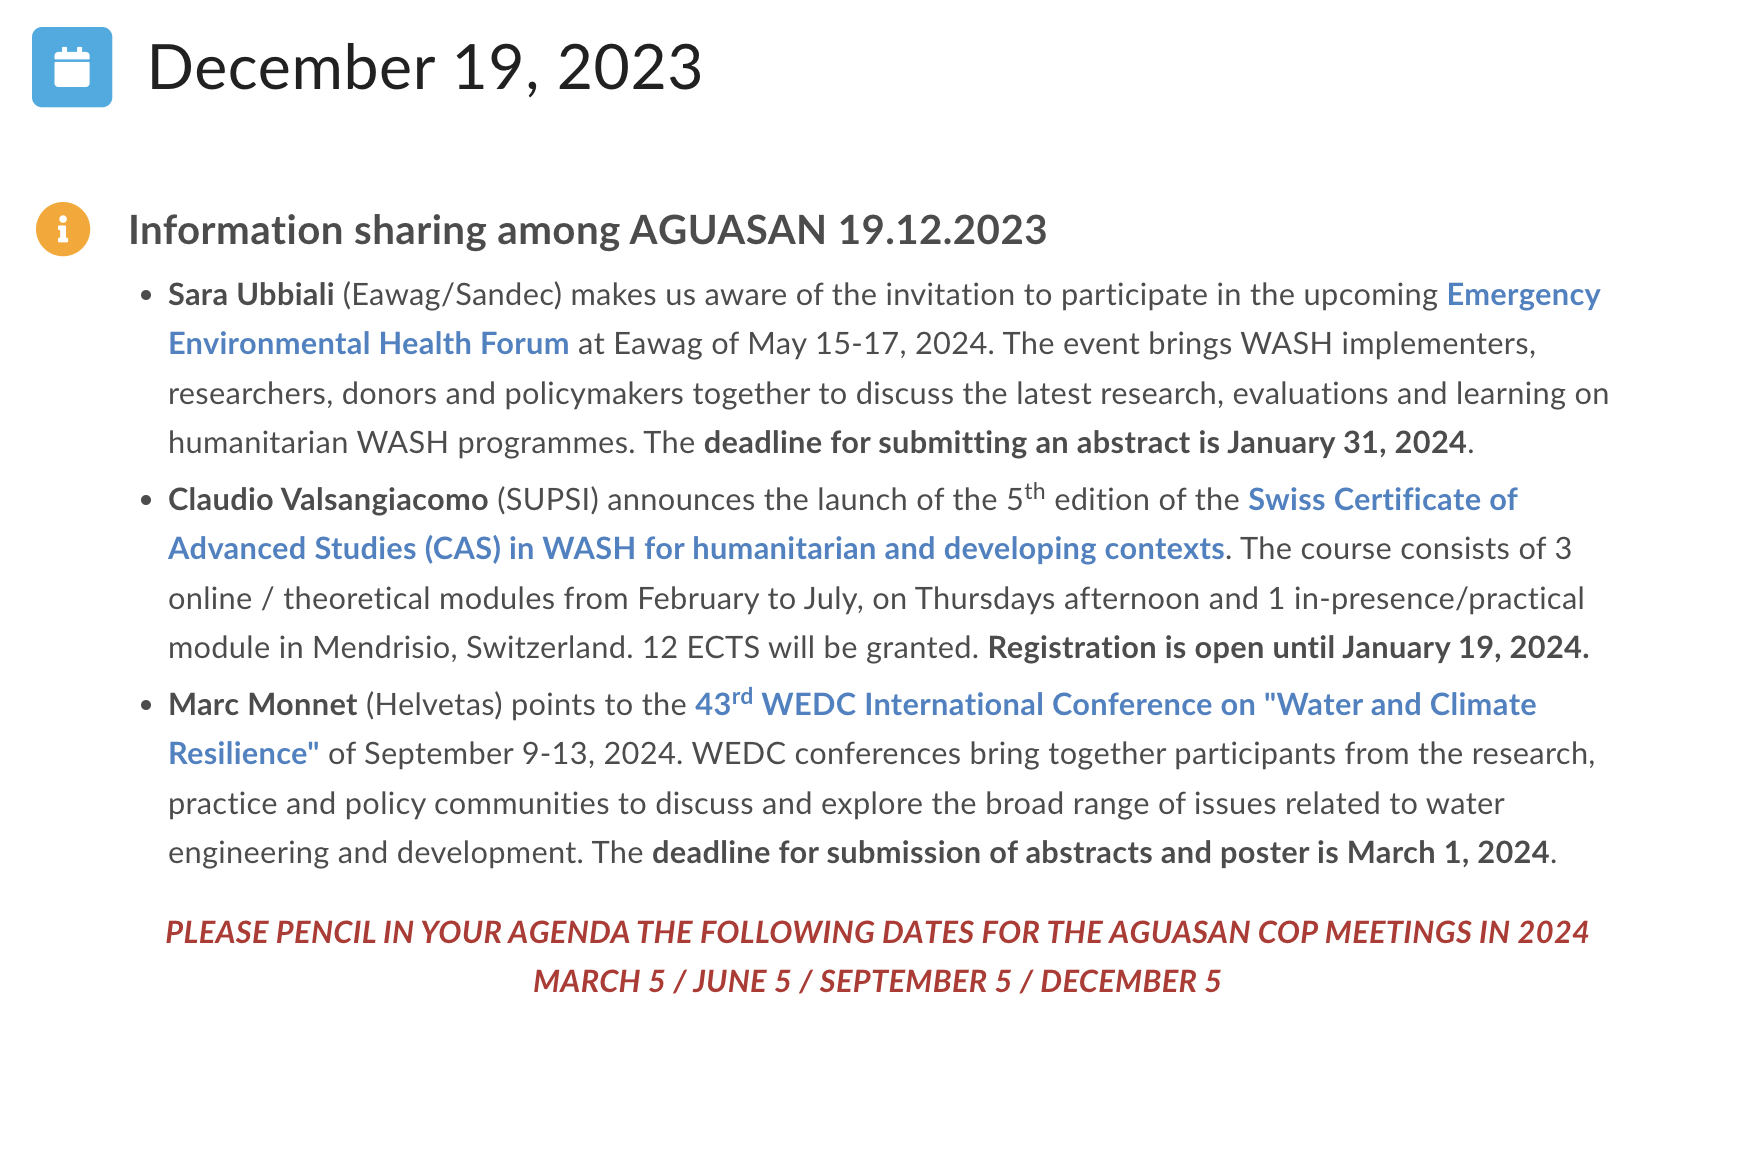 Information sharing among AGUASAN 19.12.2023